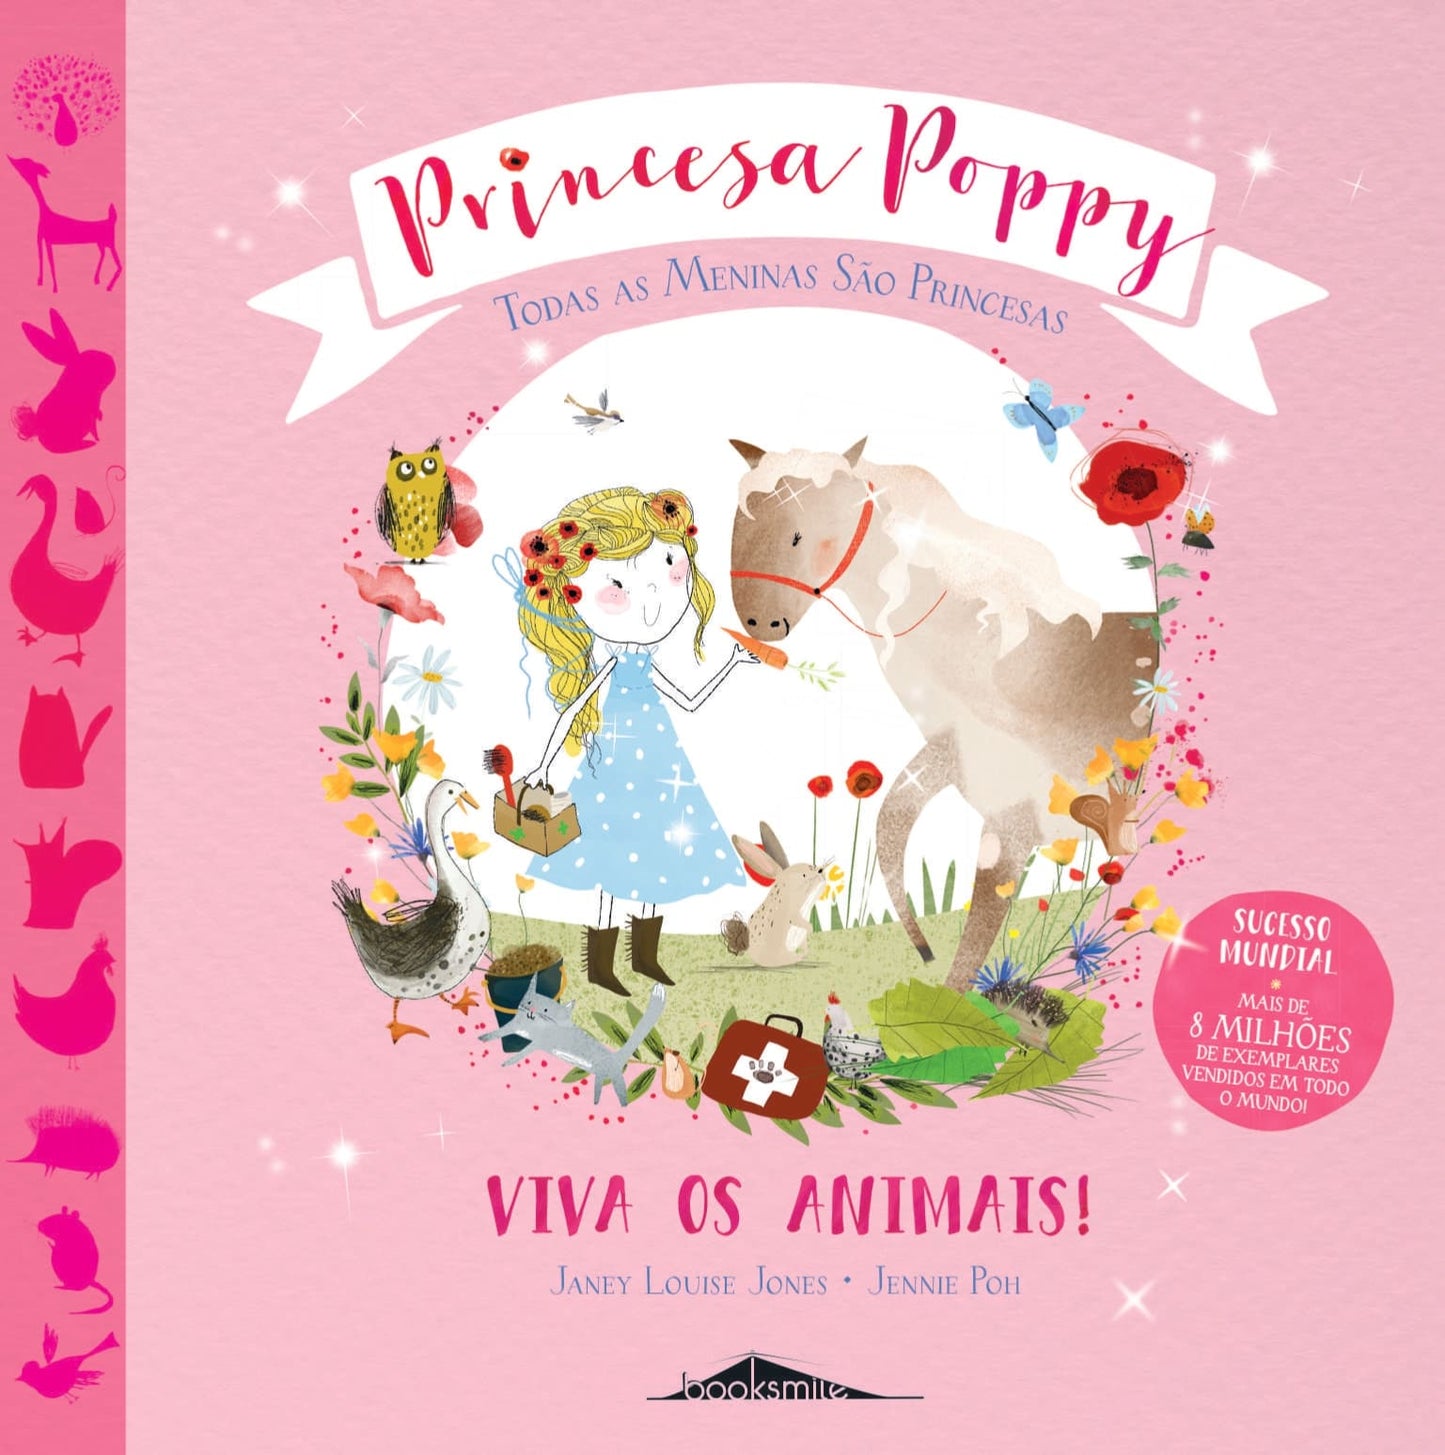 Princesa Poppy: Viva os Animais!